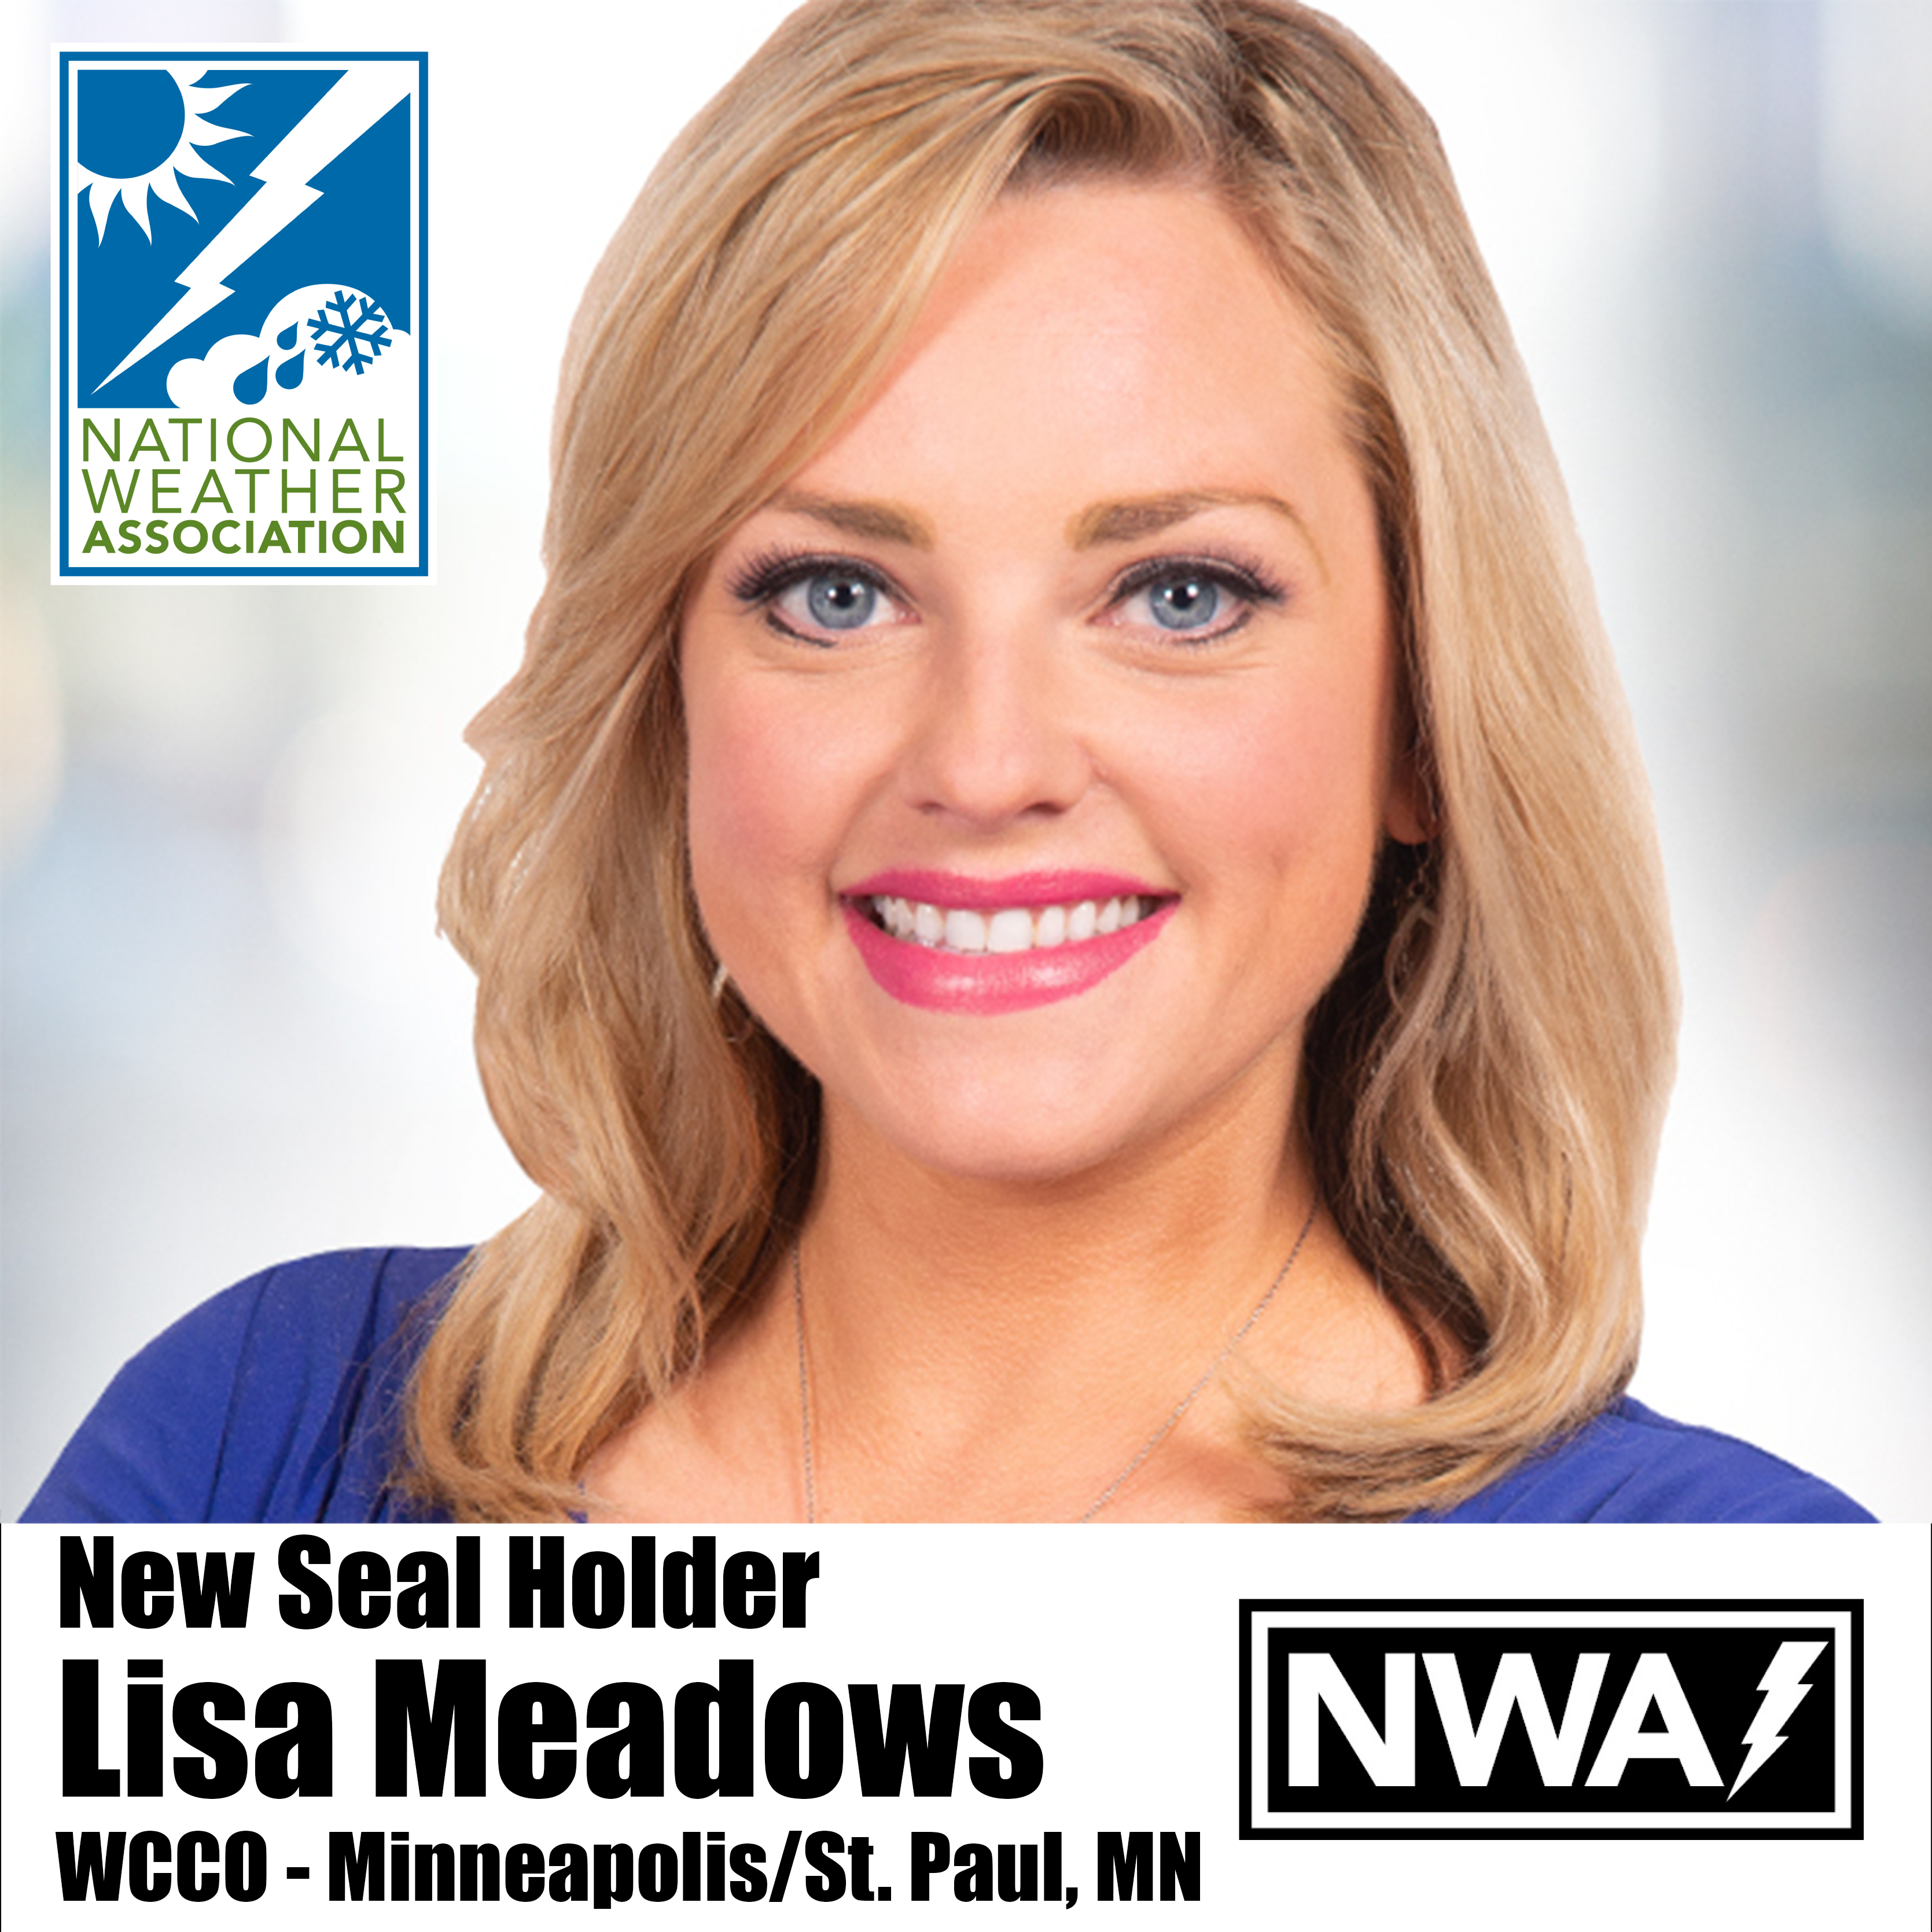 NWA Seal Holder Lisa Meadows